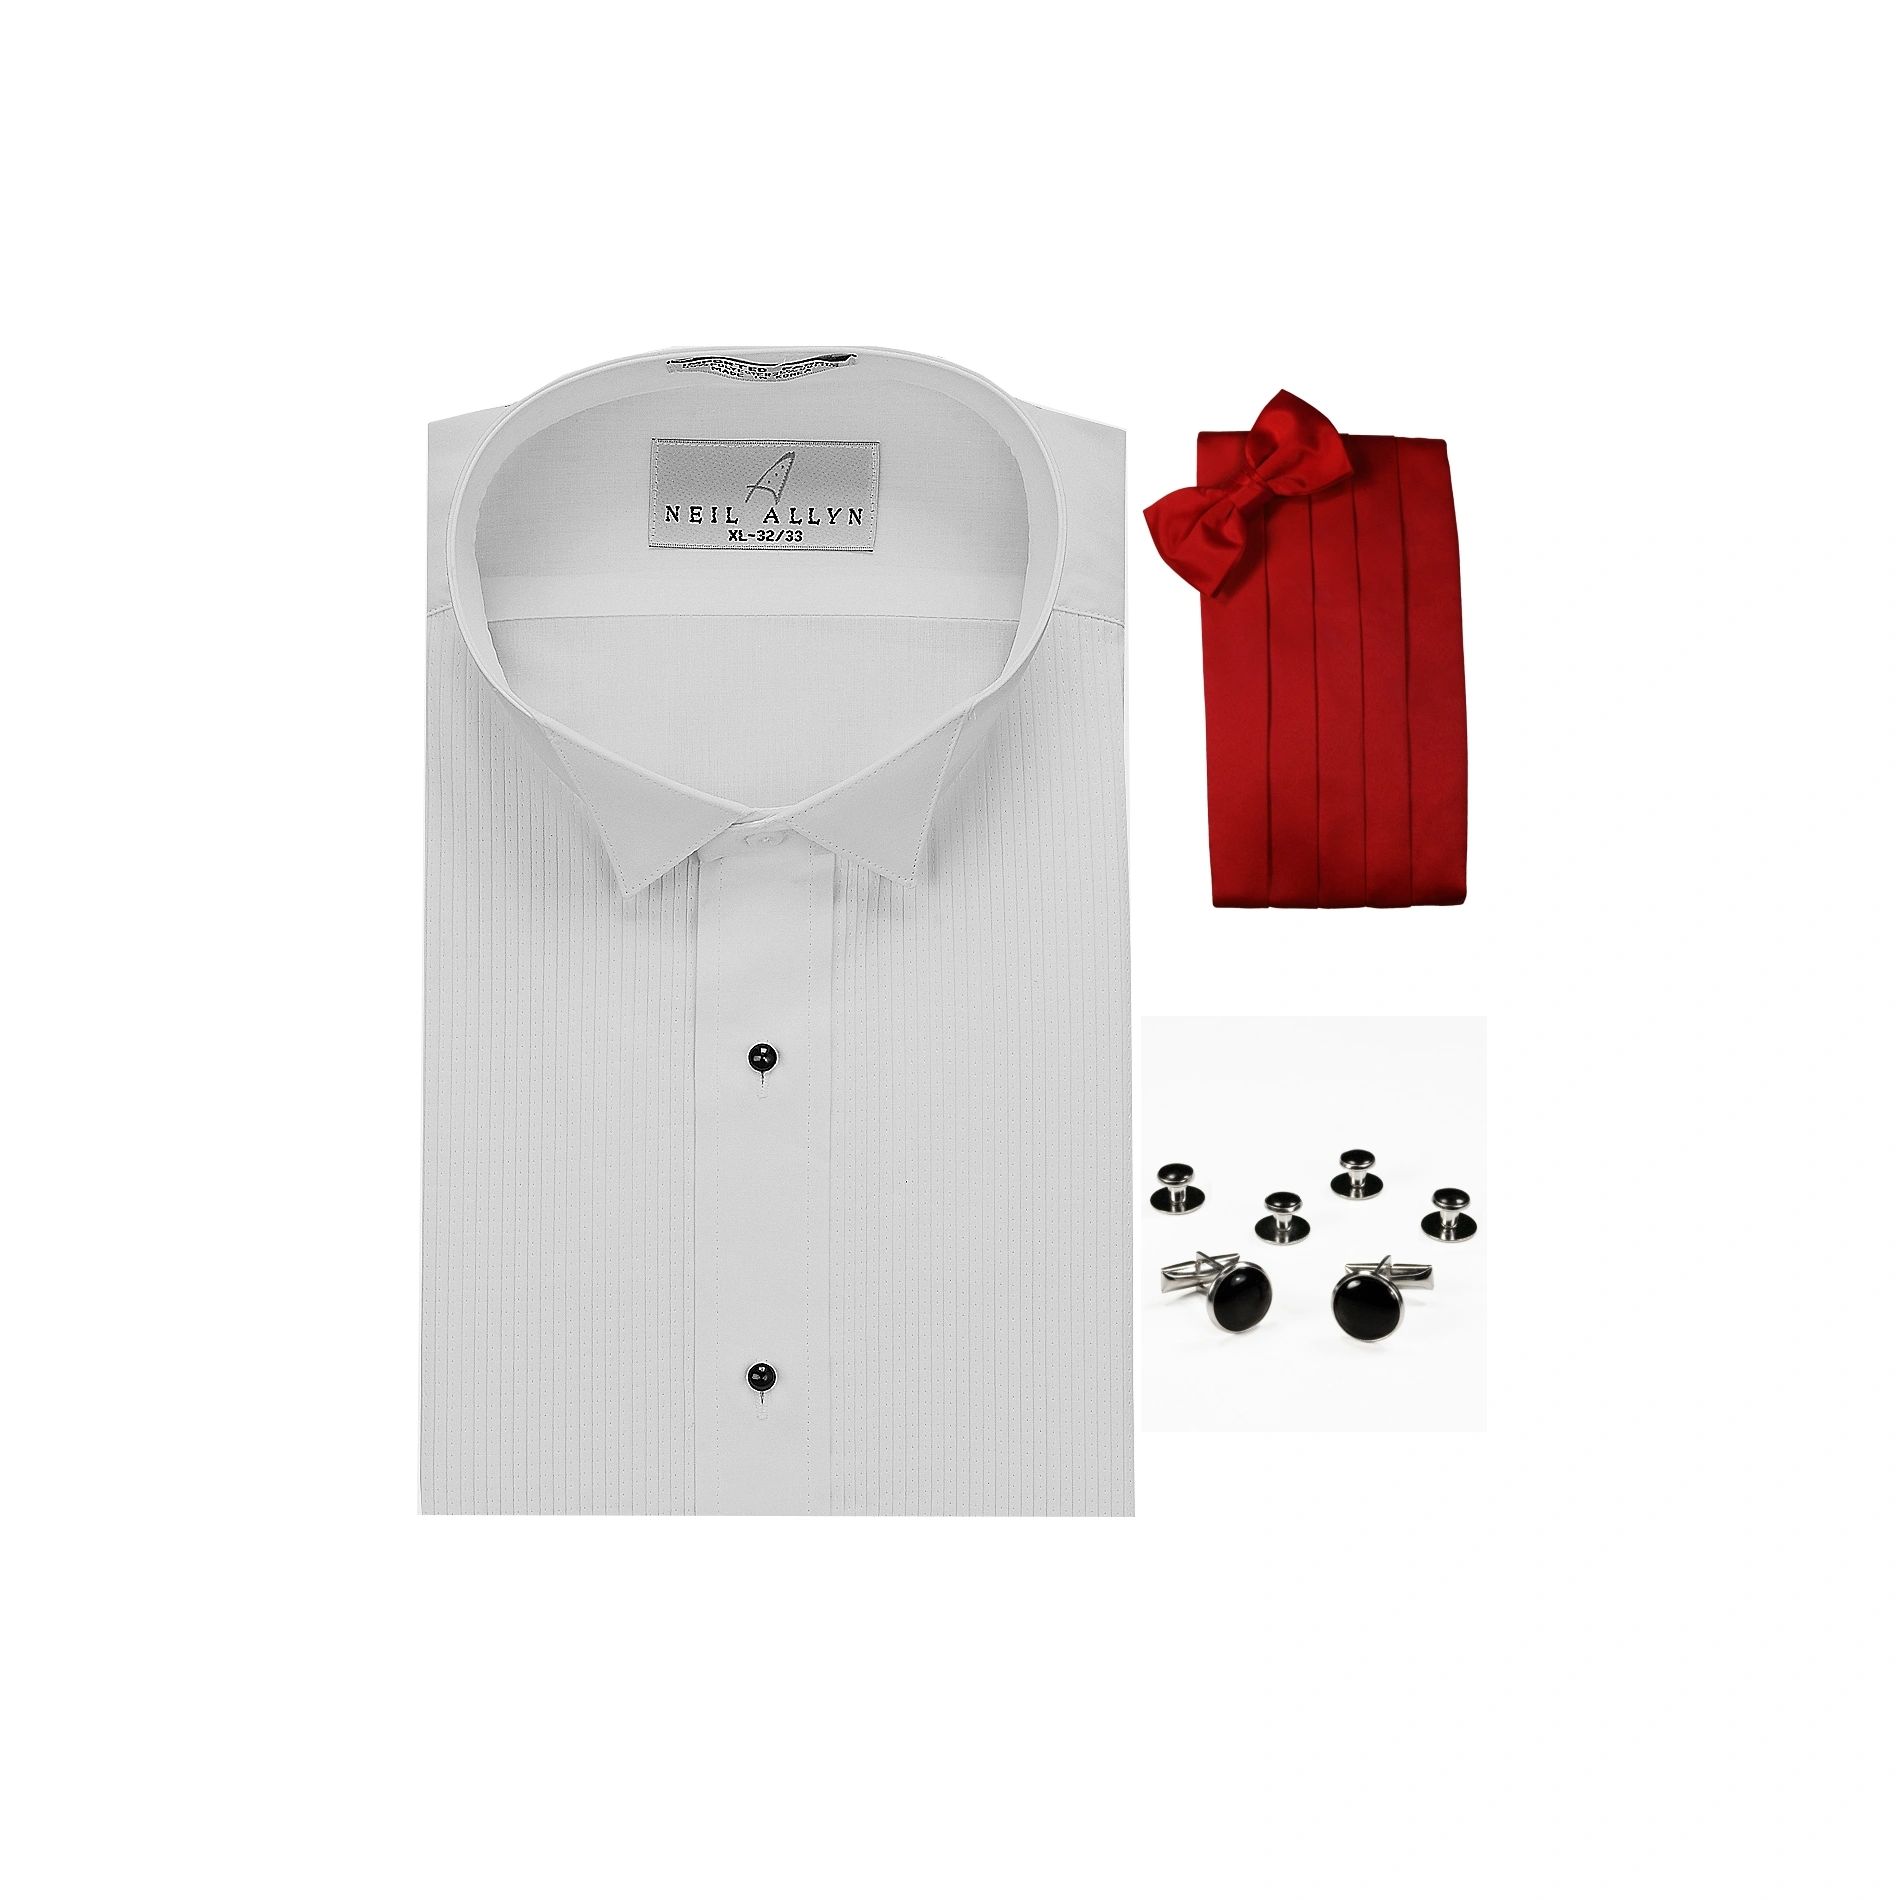 Neil Allyn Wing Collar 1/8" Pleats Formal Tuxedo Shirt, Red Cummerbund, Bow-Tie, Cuff Links & Studs Set